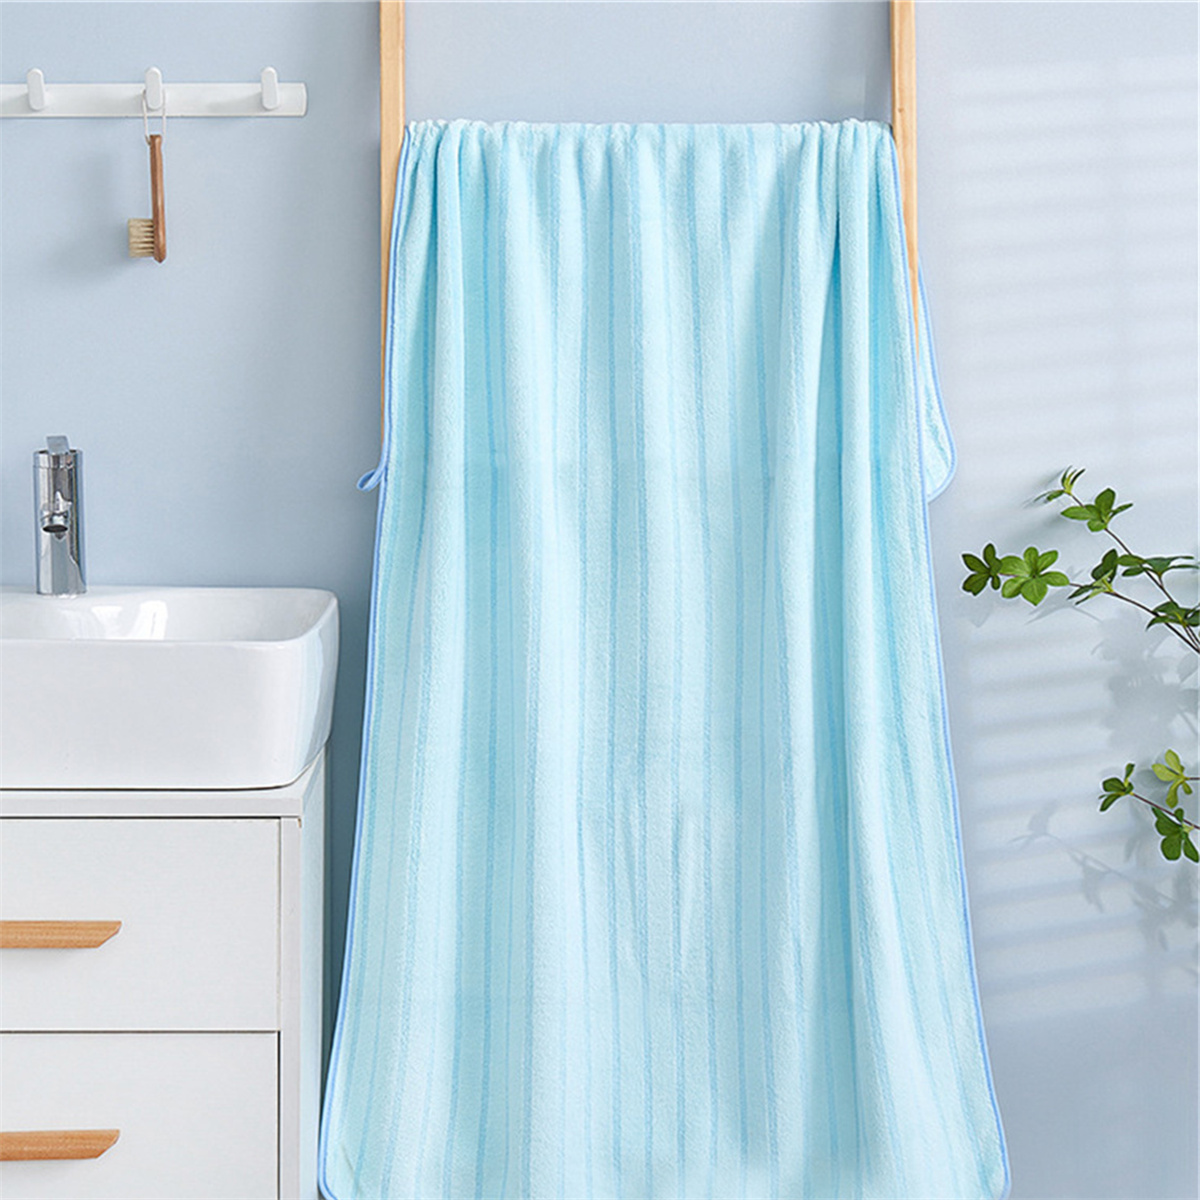 Body Bath & Shower Towel – Large 30×55 – NanoTowel